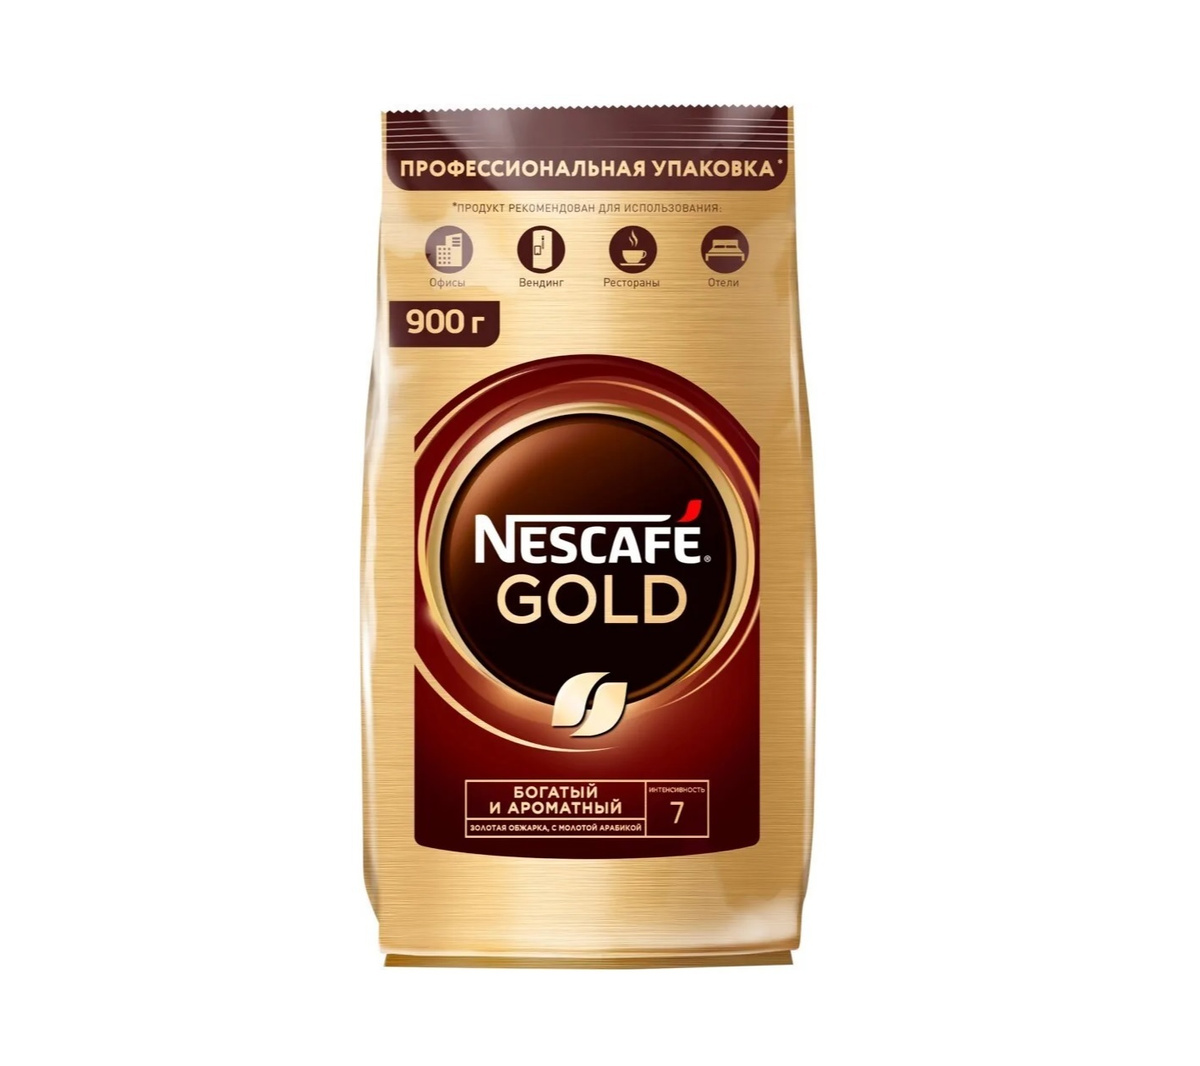 Nescafe gold пакет. Nescafe кофе Gold 900г.. Nescafe Gold, пакет, 900г. Кофе молотый Нескафе Голд. Кофе растворимый Нескафе Голд 320г м/у.